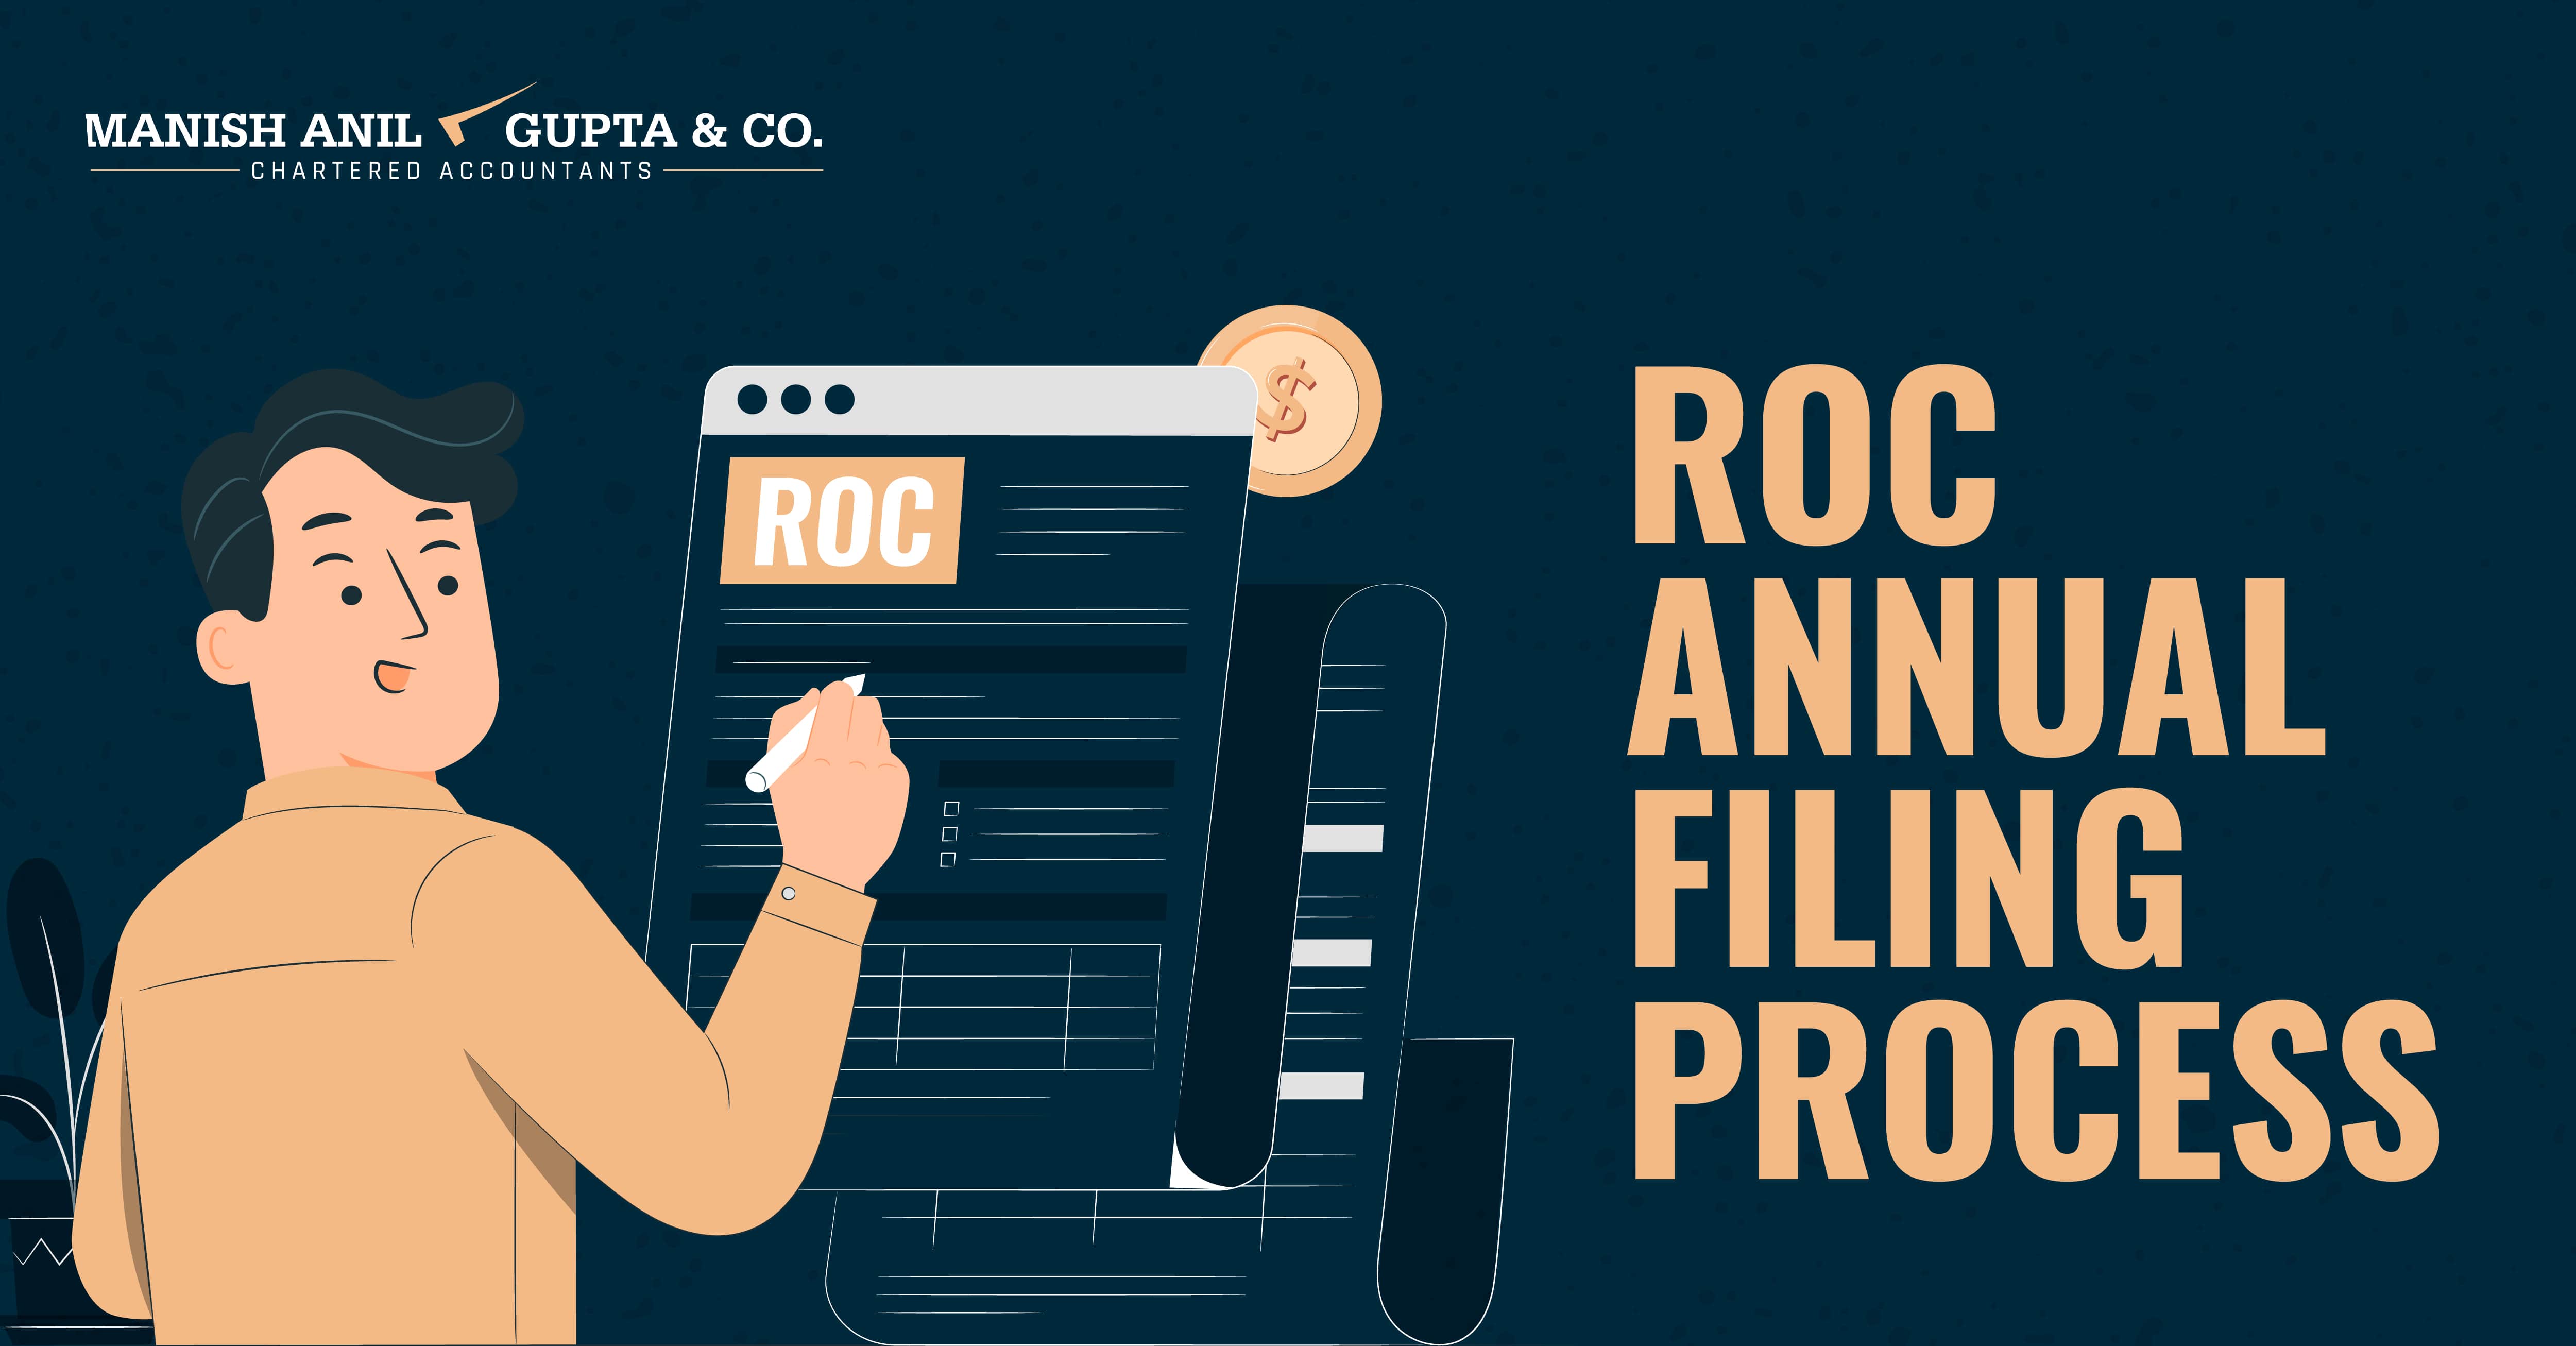 <roc-annual-filing-process